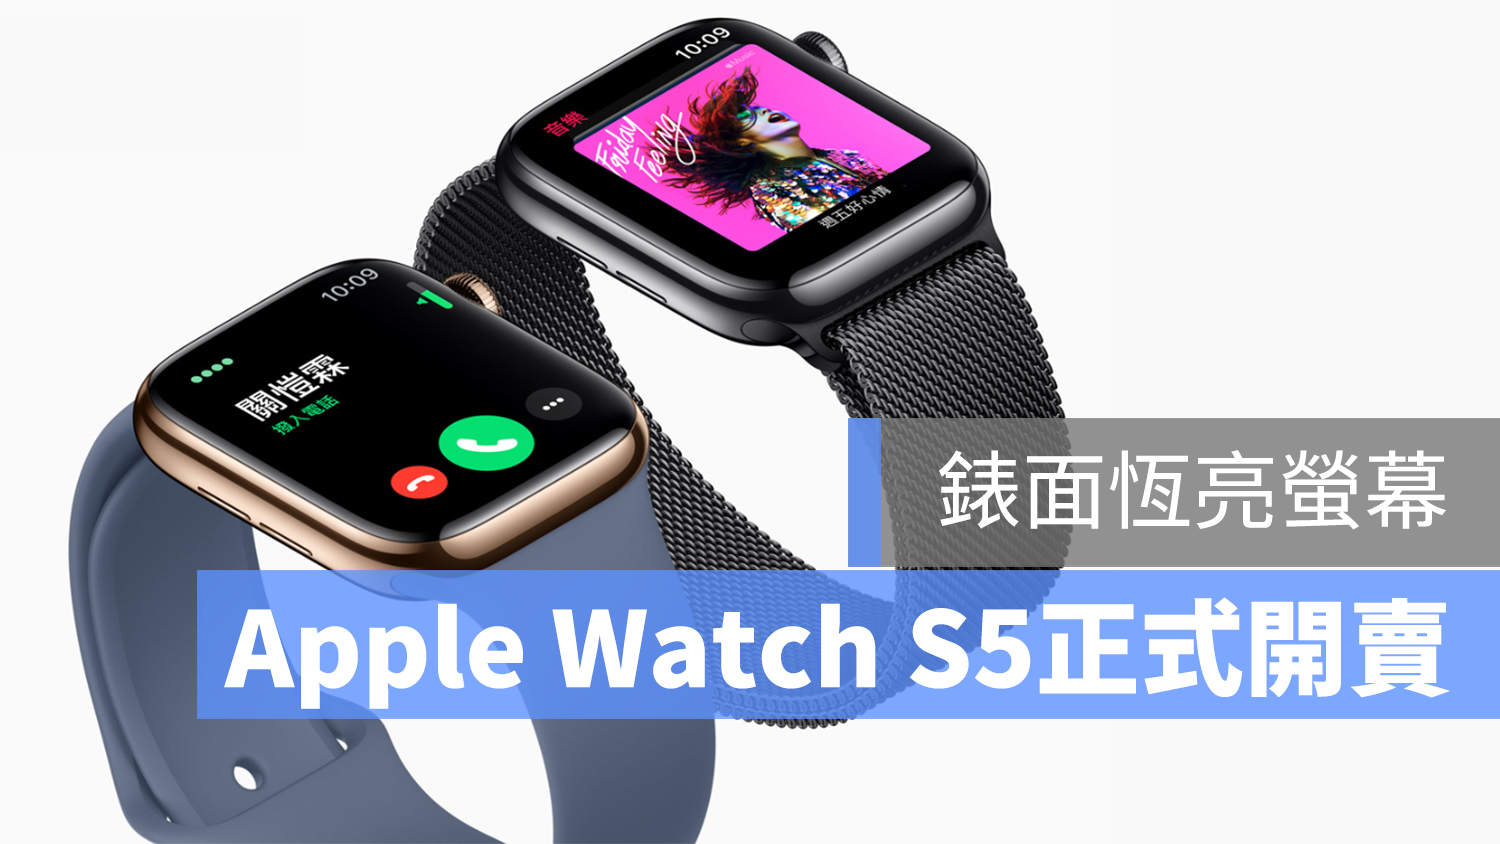 apple watch Series 5 上市 台灣